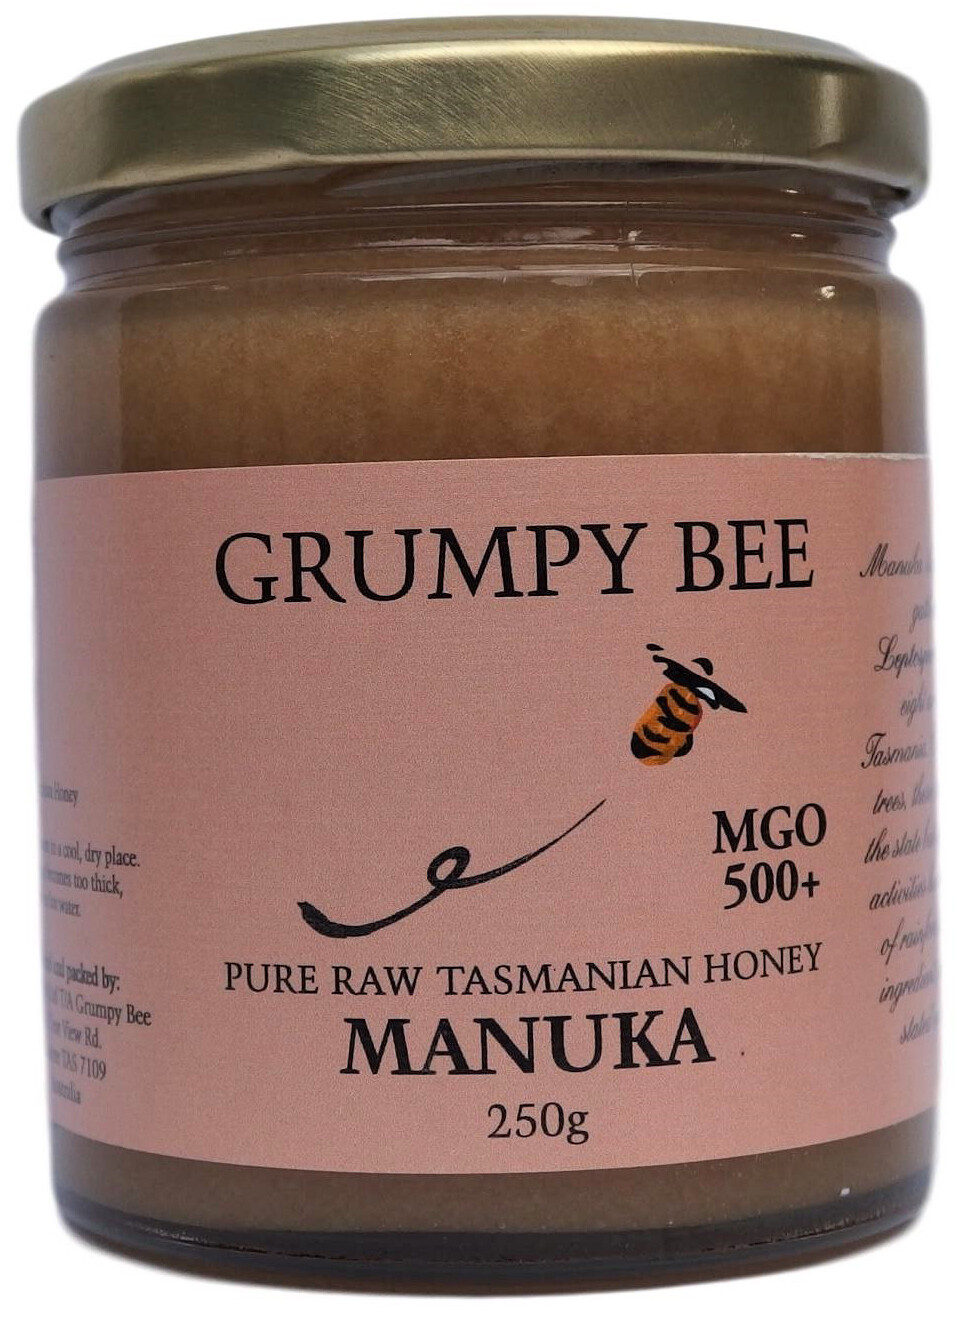 Grumpy Bee Manuka Honey MGO 500+ 250g